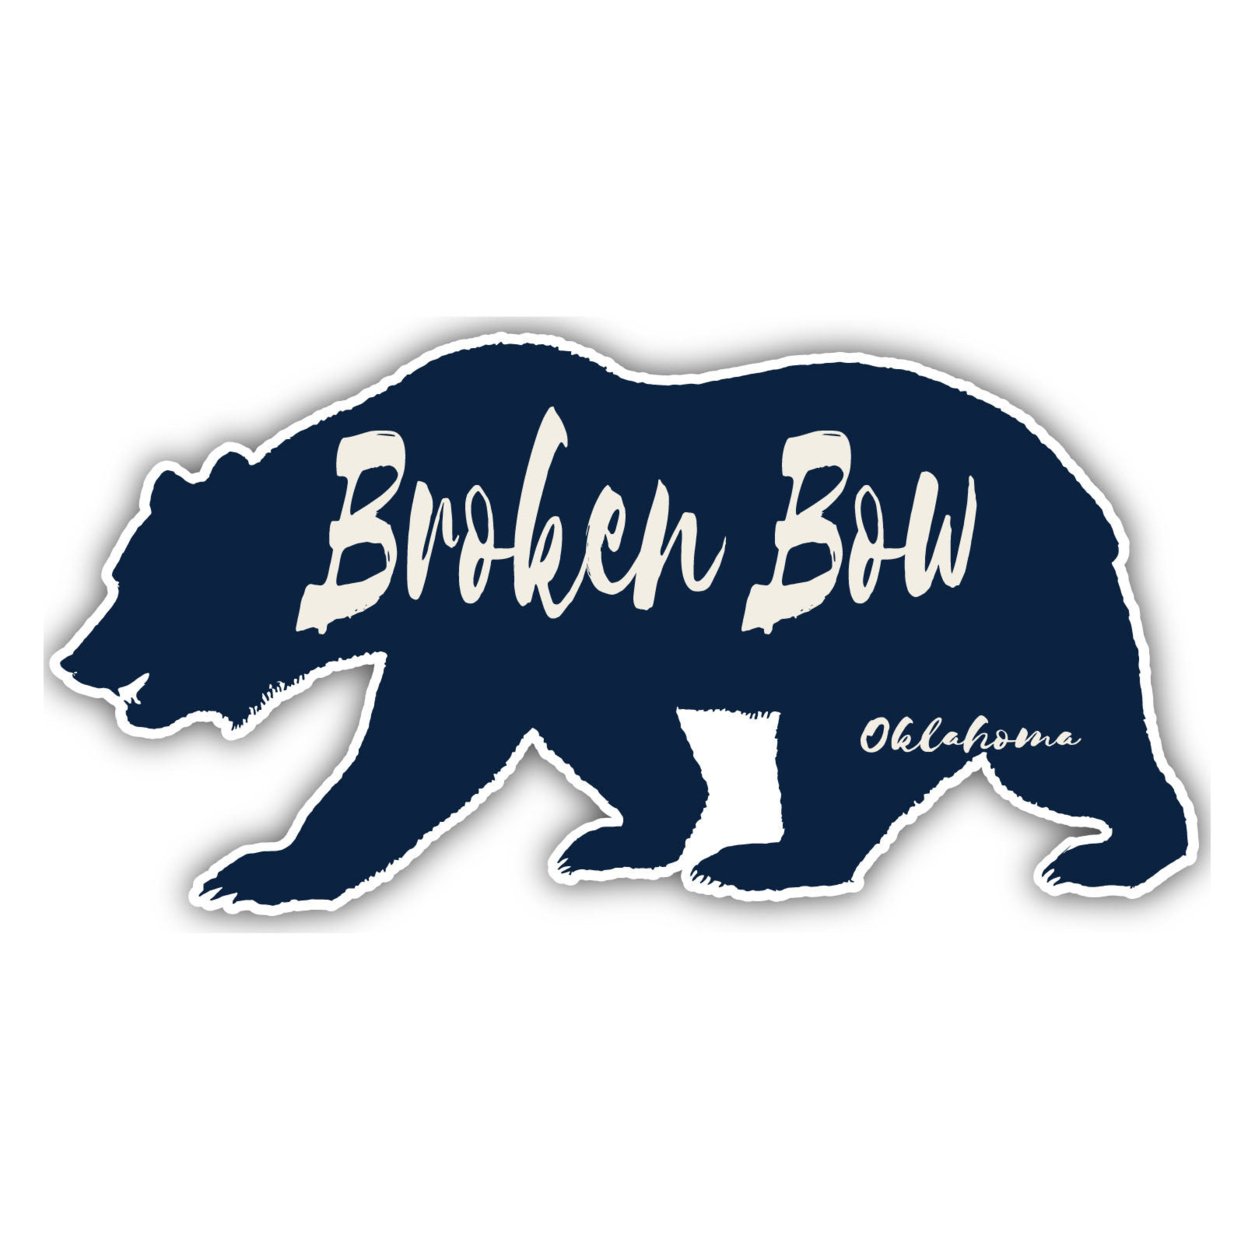 Broken Bow Oklahoma Souvenir Decorative Stickers (Choose Theme And Size) - Single Unit, 12-Inch, Bear